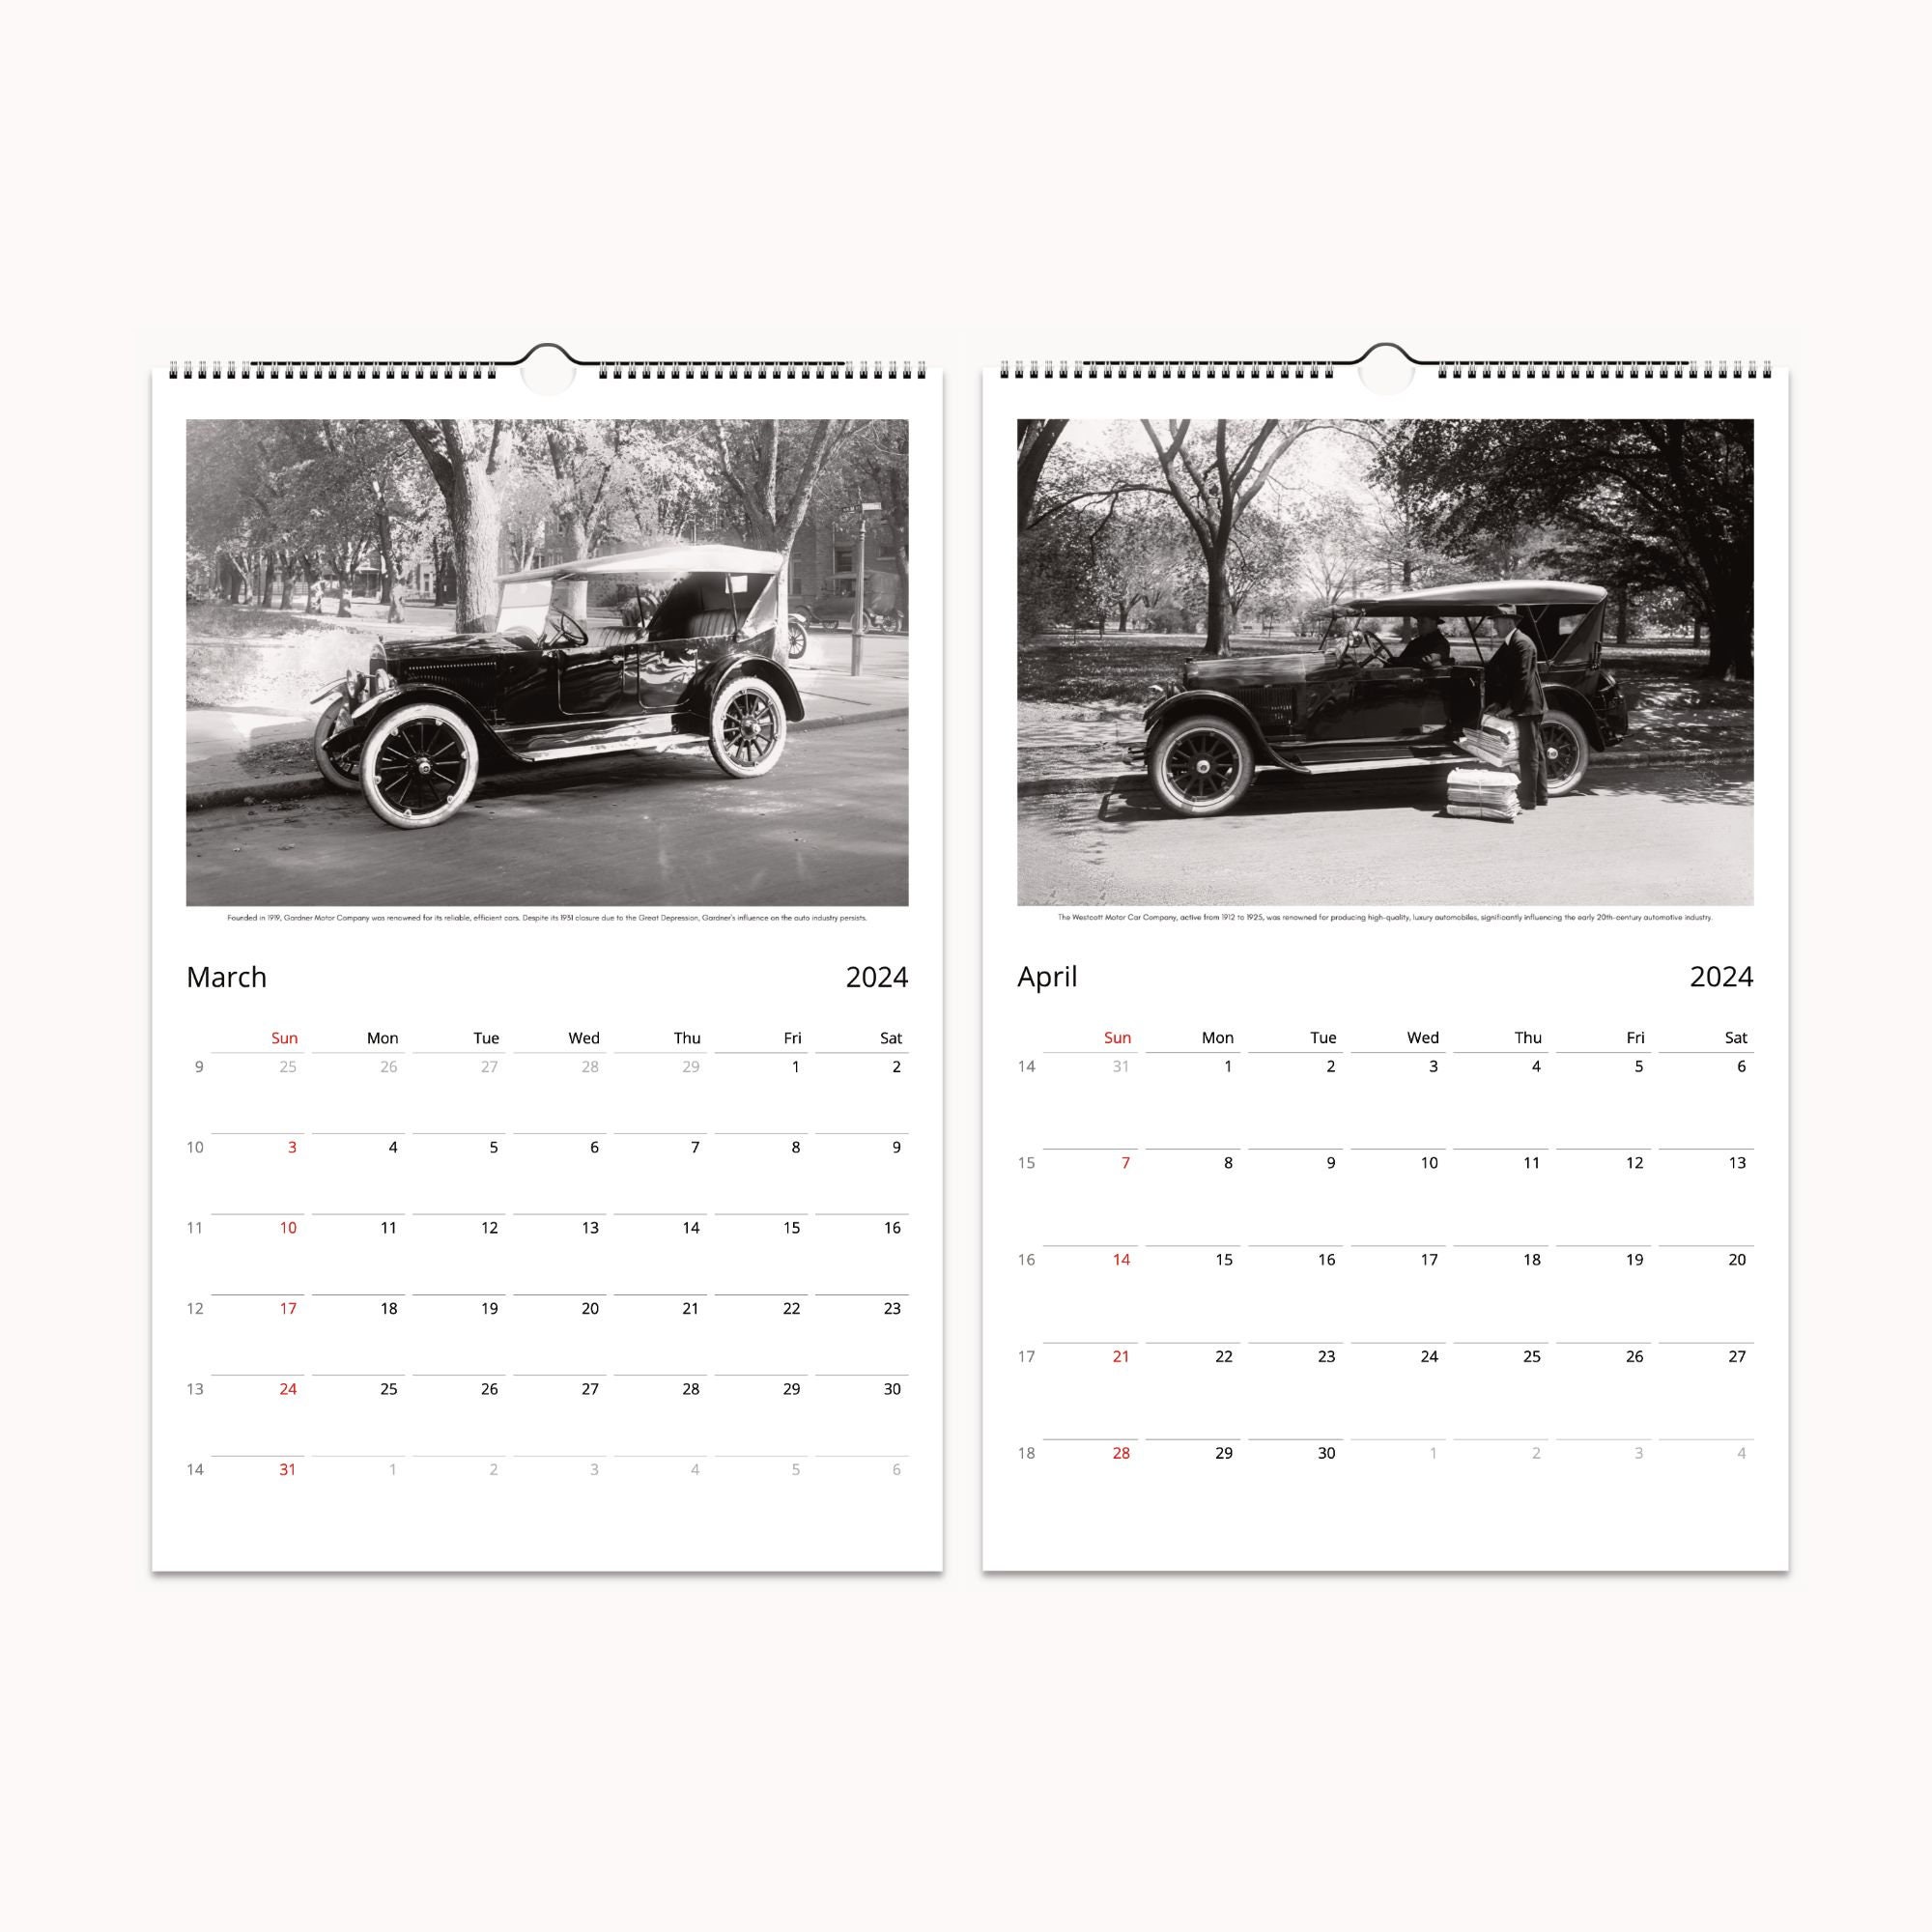 2024 Wall Calendar: Roaring Twenties Perfect Gift for Car